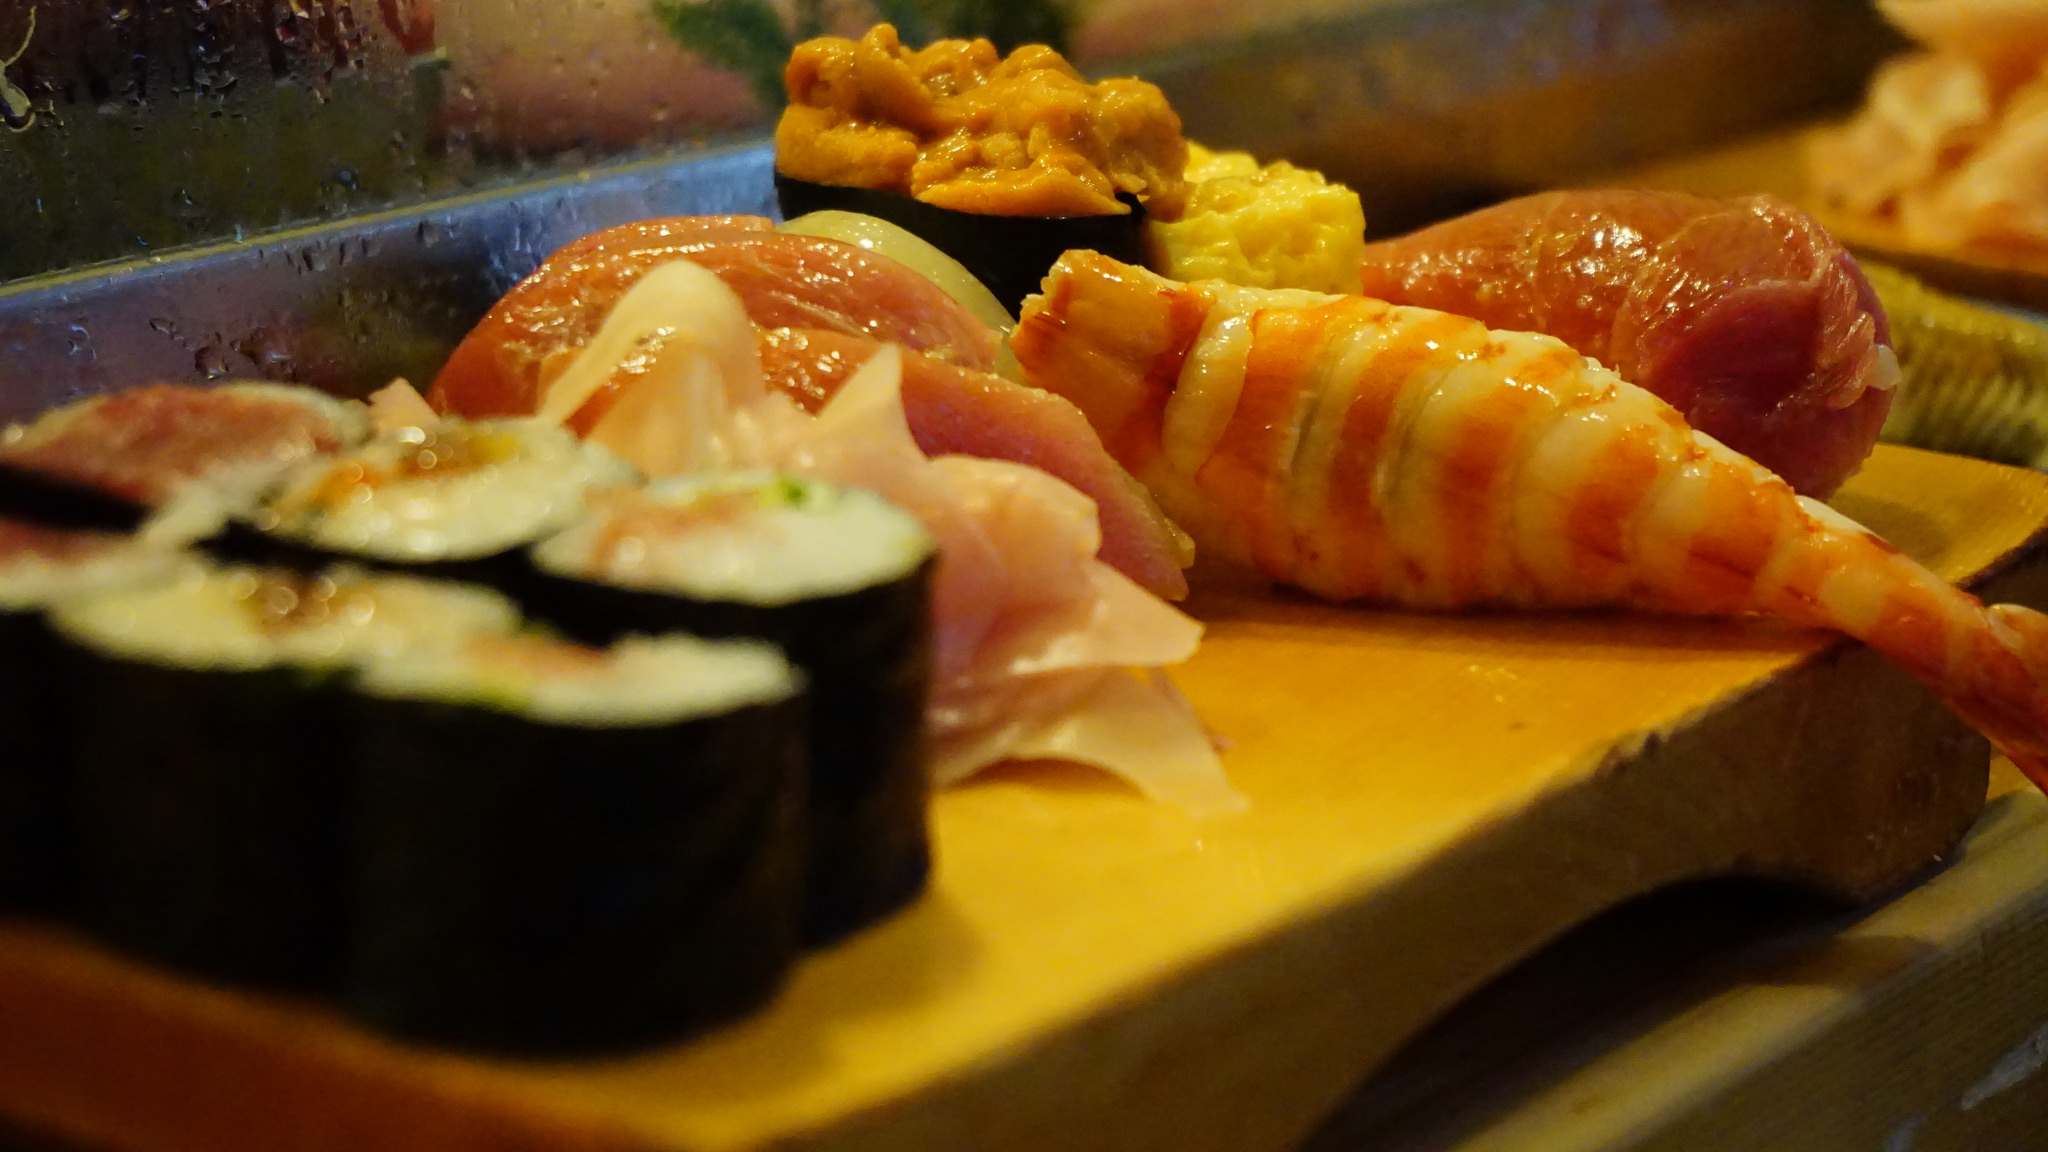 Delicious sushi breakfast at Daiwa Sushi